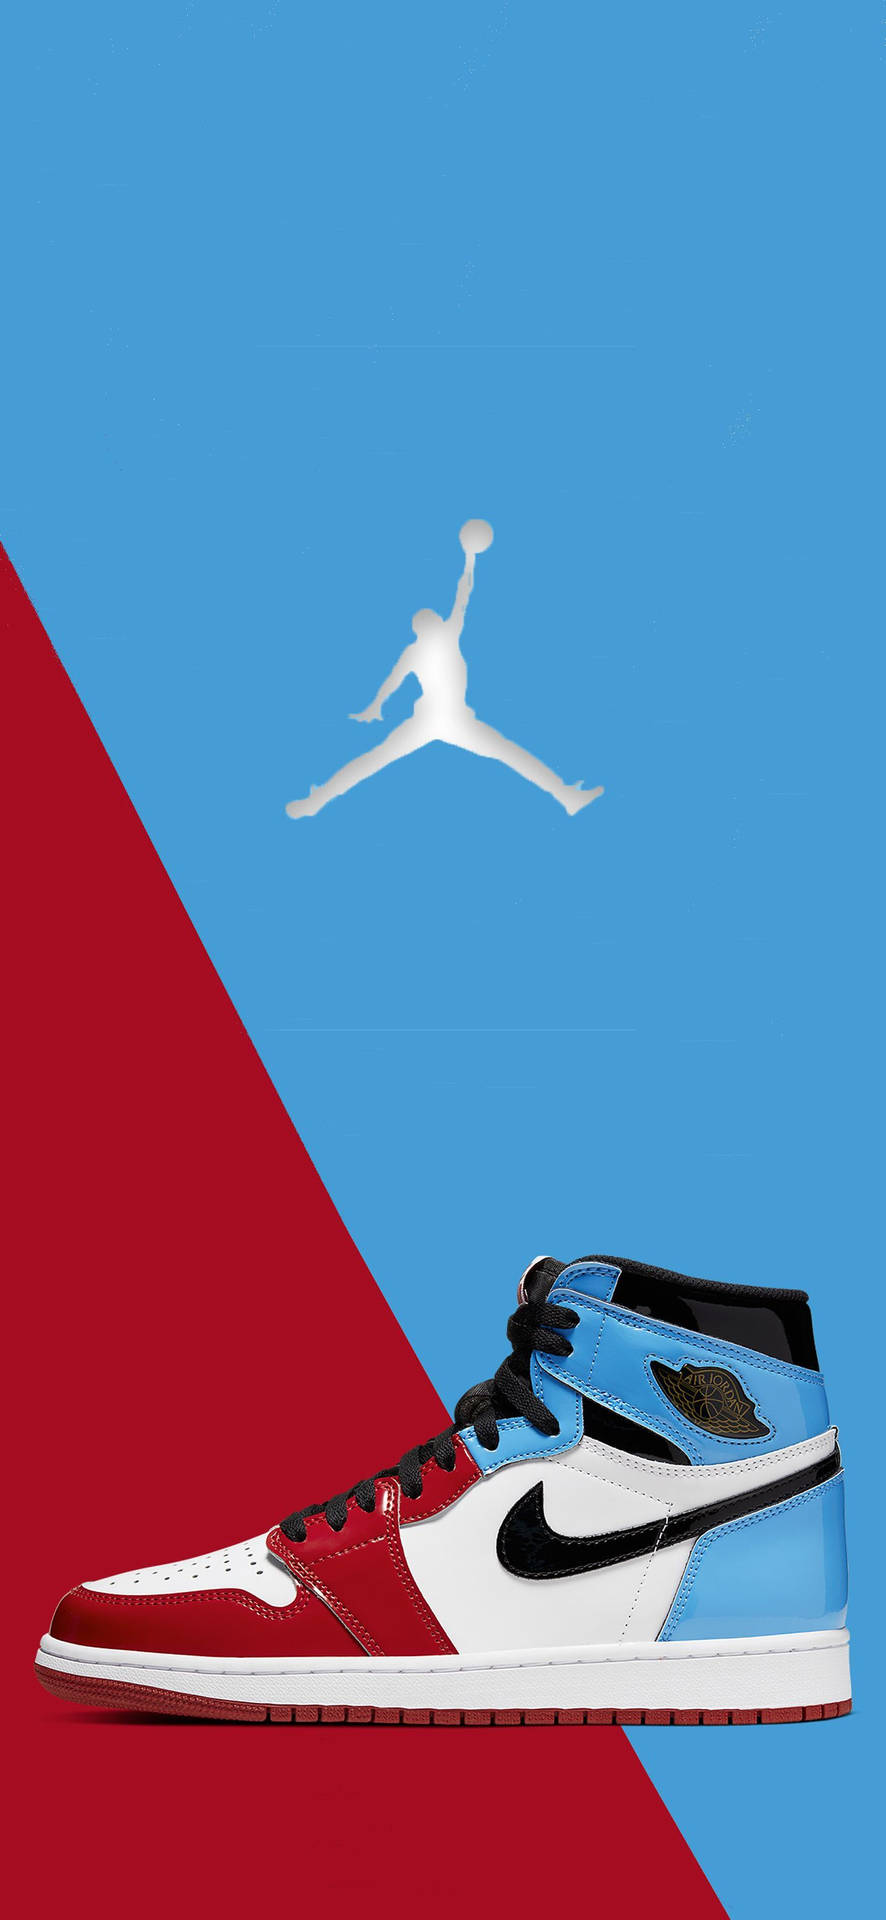 Jordan Logo 1436X3113 Wallpaper and Background Image